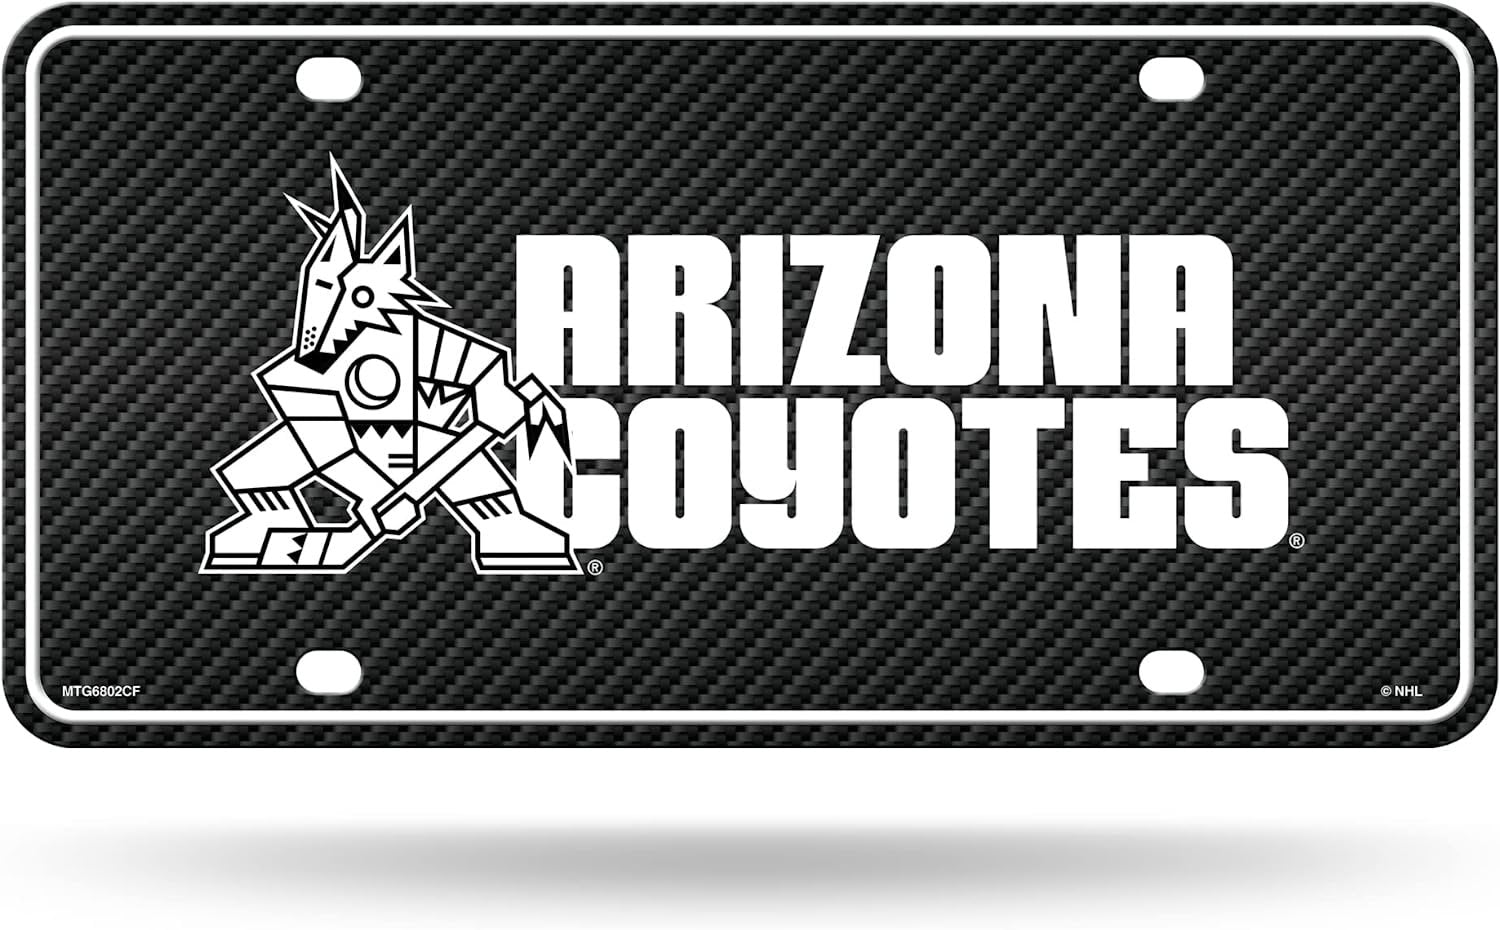 Arizona Coyotes Metal License Plate Tag Carbon Fiber Design Kachina Logo 12x6 Inch